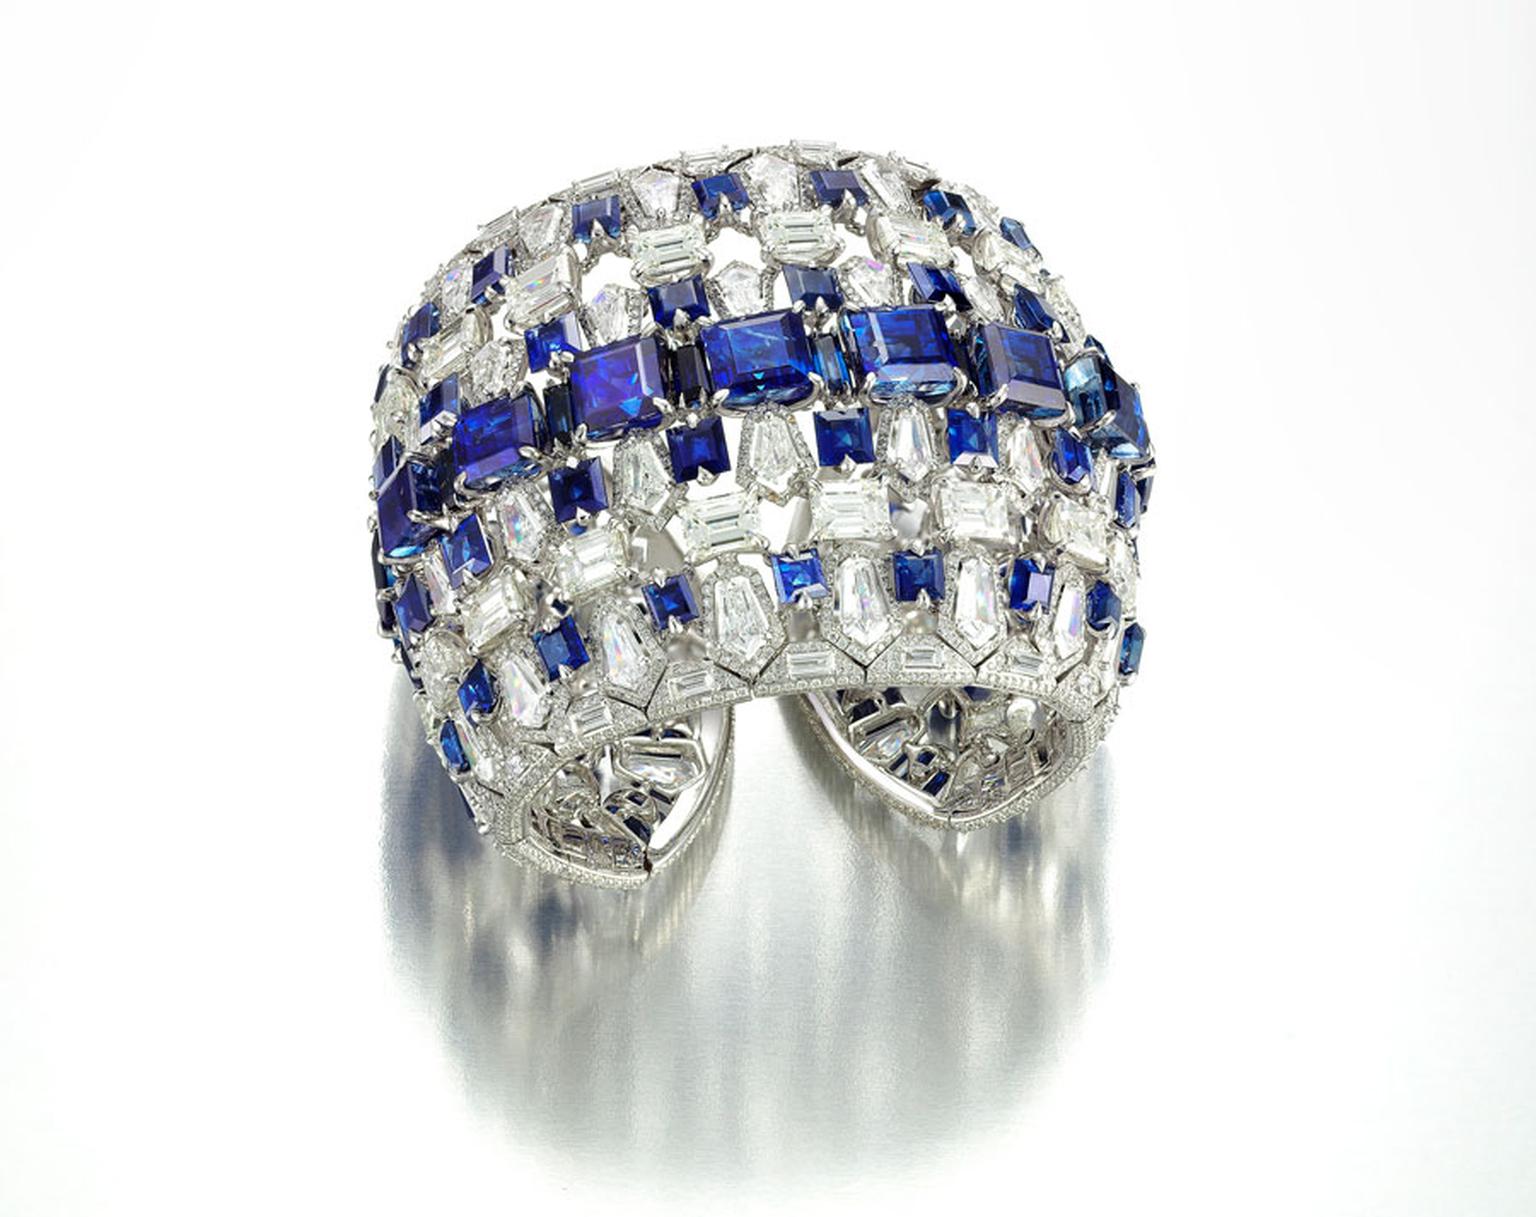 MPL-2013-BOGH-ART-Kashmir-sapphires-and-diamonds-bracelet.jpg